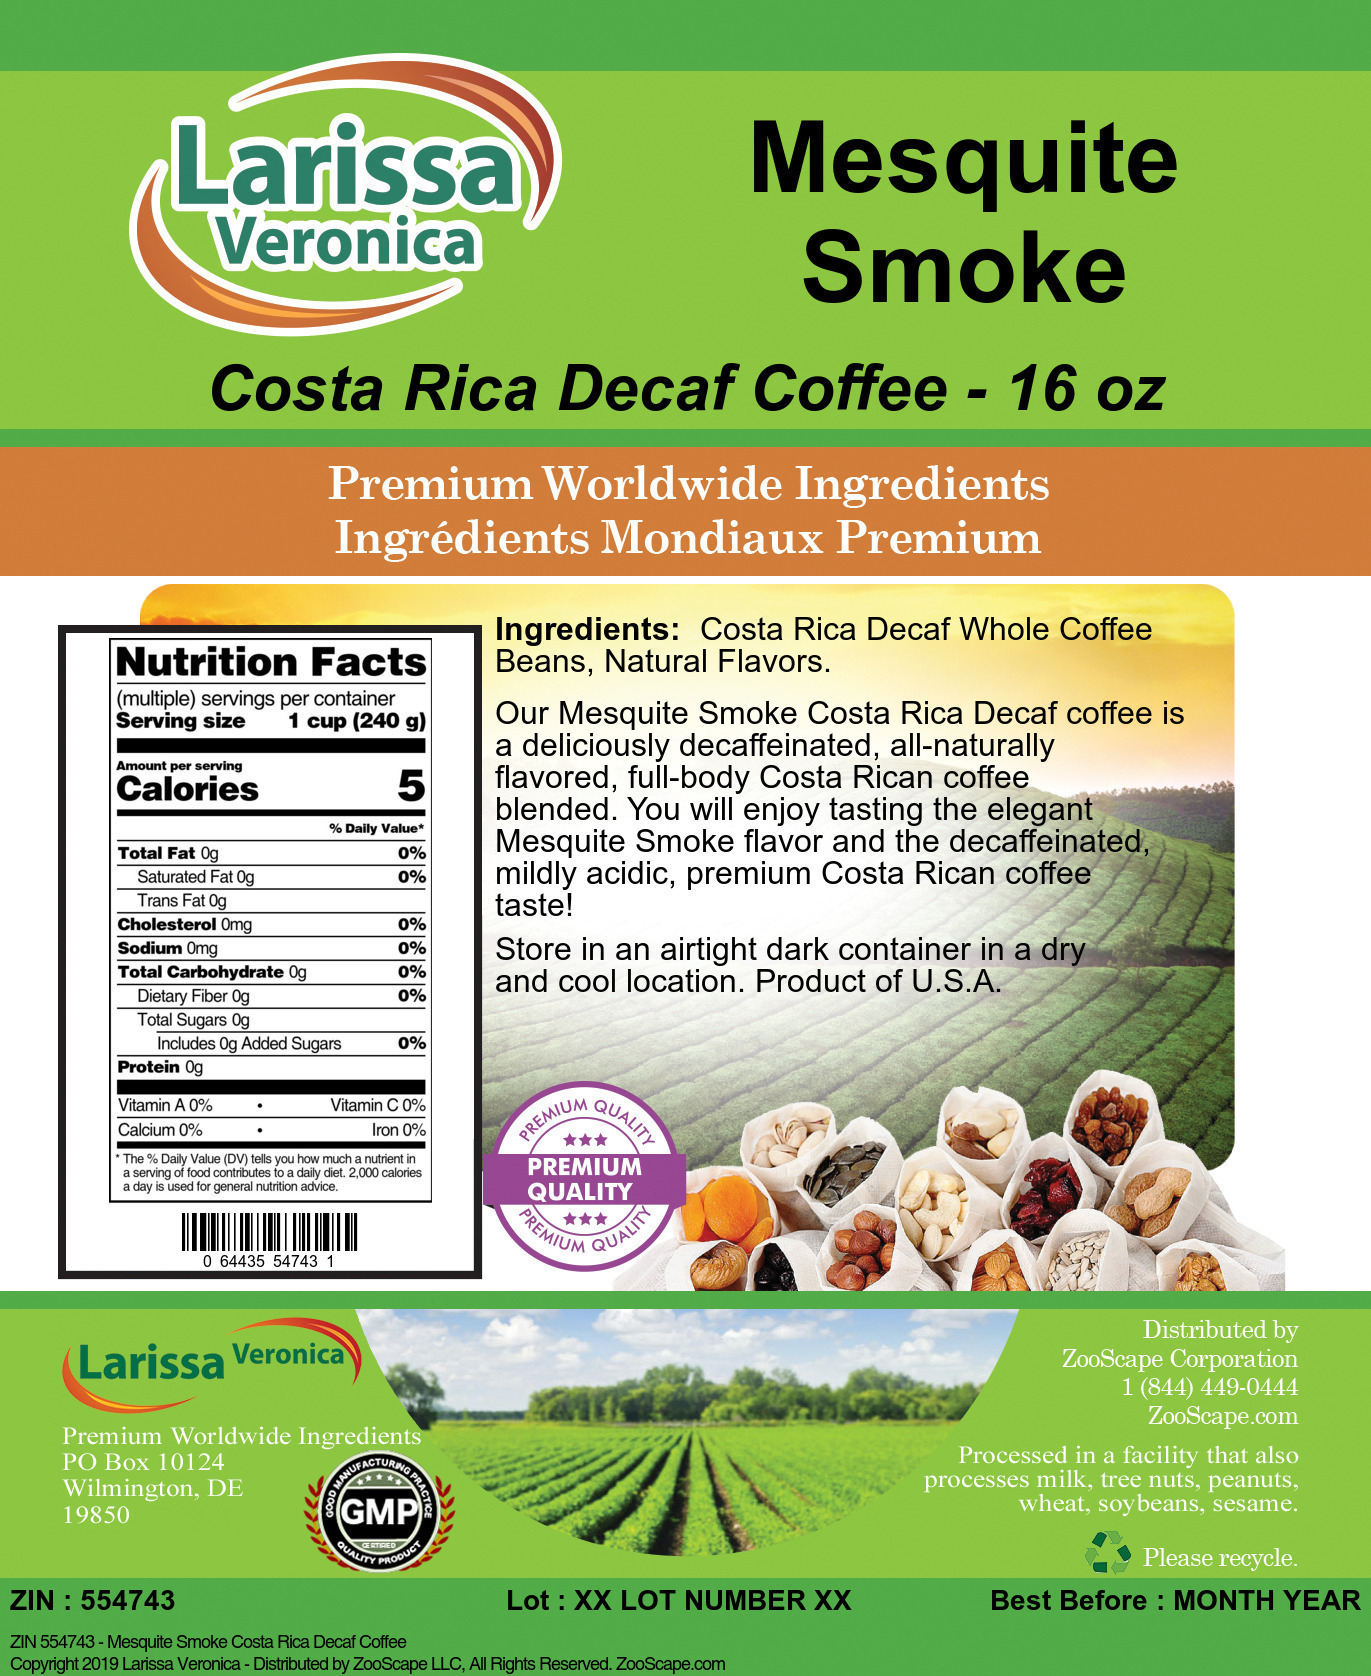 Mesquite Smoke Costa Rica Decaf Coffee - Label